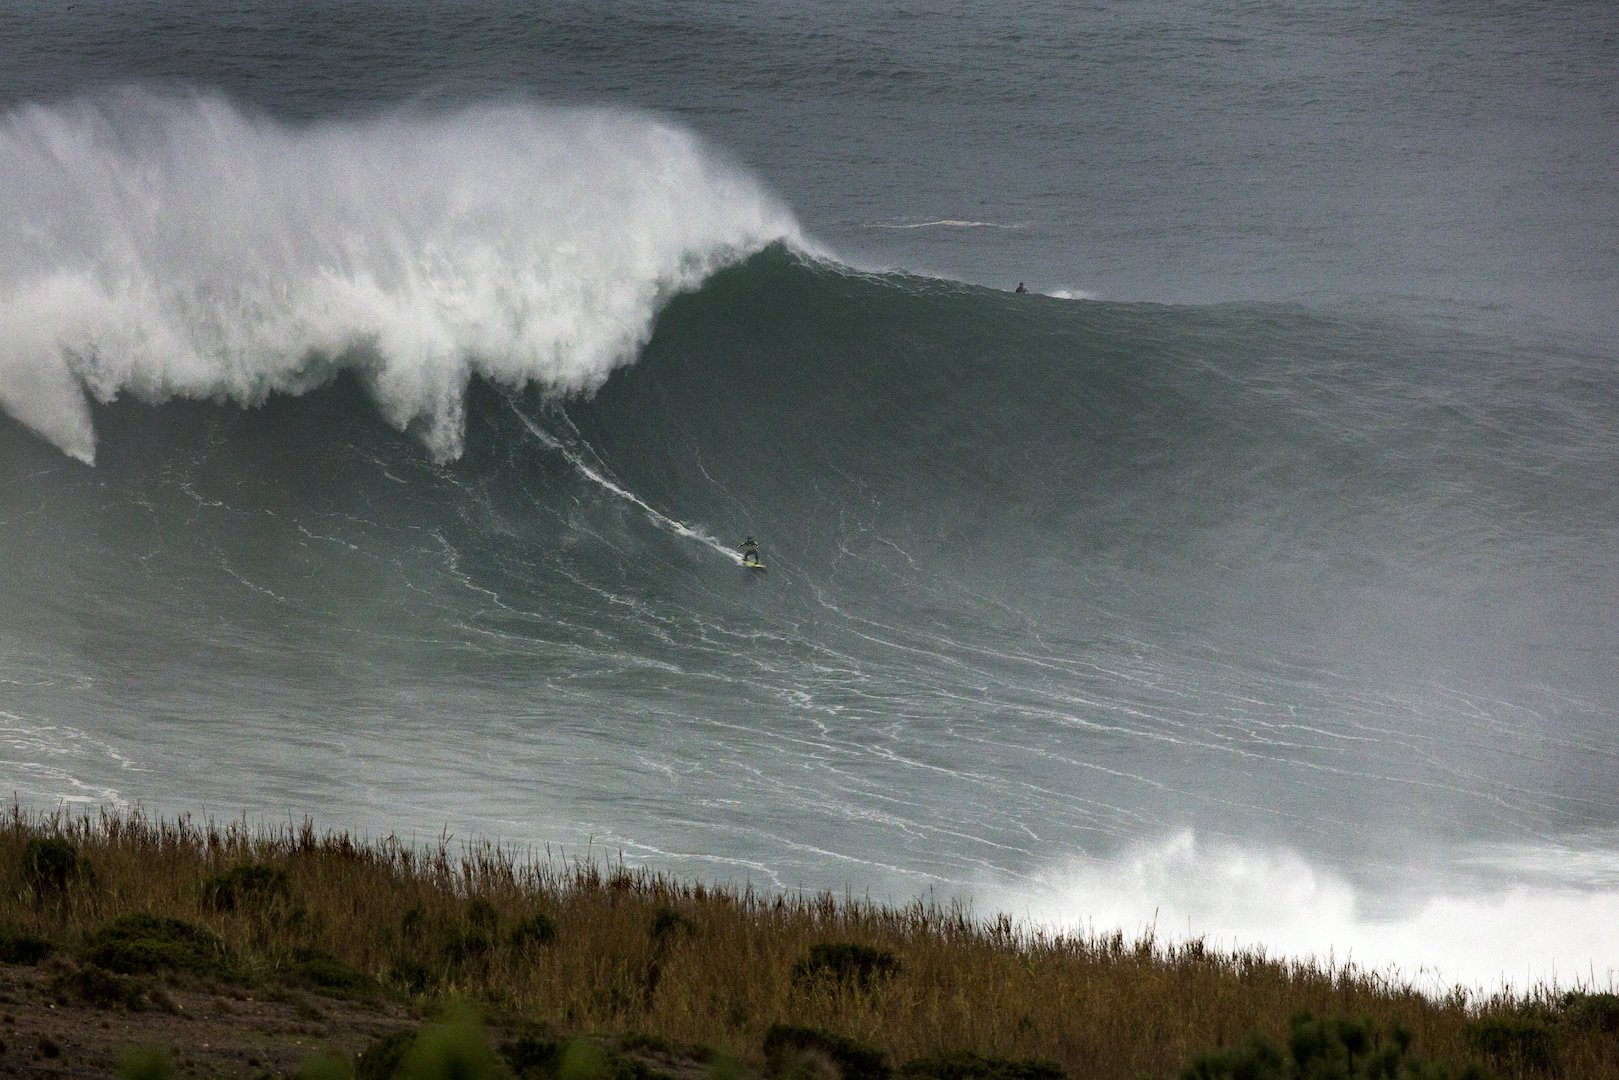 Carlos Burle surfs a big wave at Praia do Norte in Nazare, Portugal on November 01, 2015 // Hugo Silva/Red Bull Content Pool